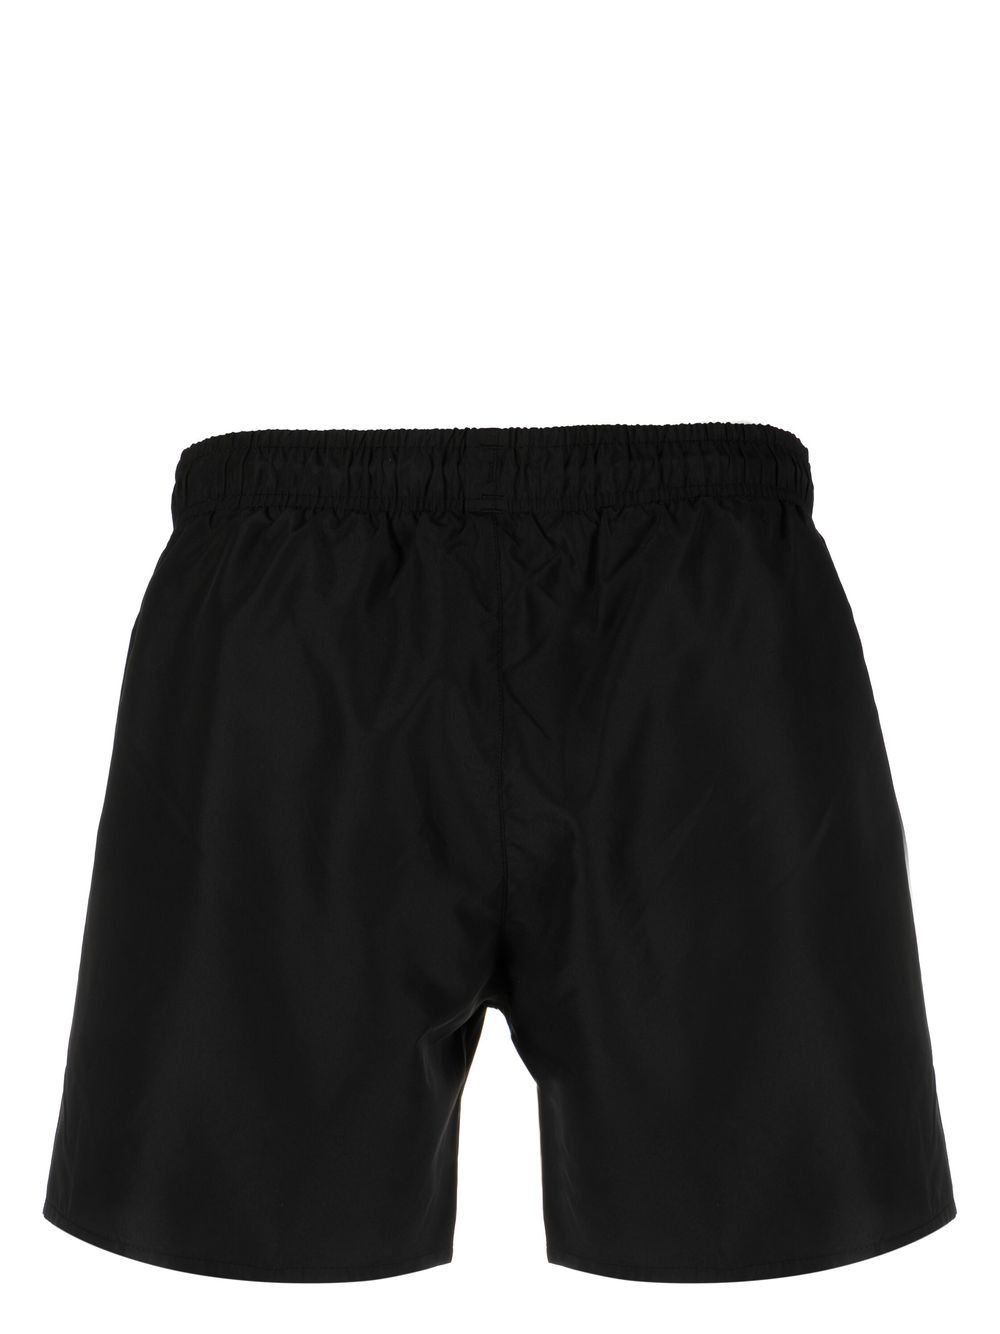 Embroidered-logo swim shorts<BR/><BR/><BR/>